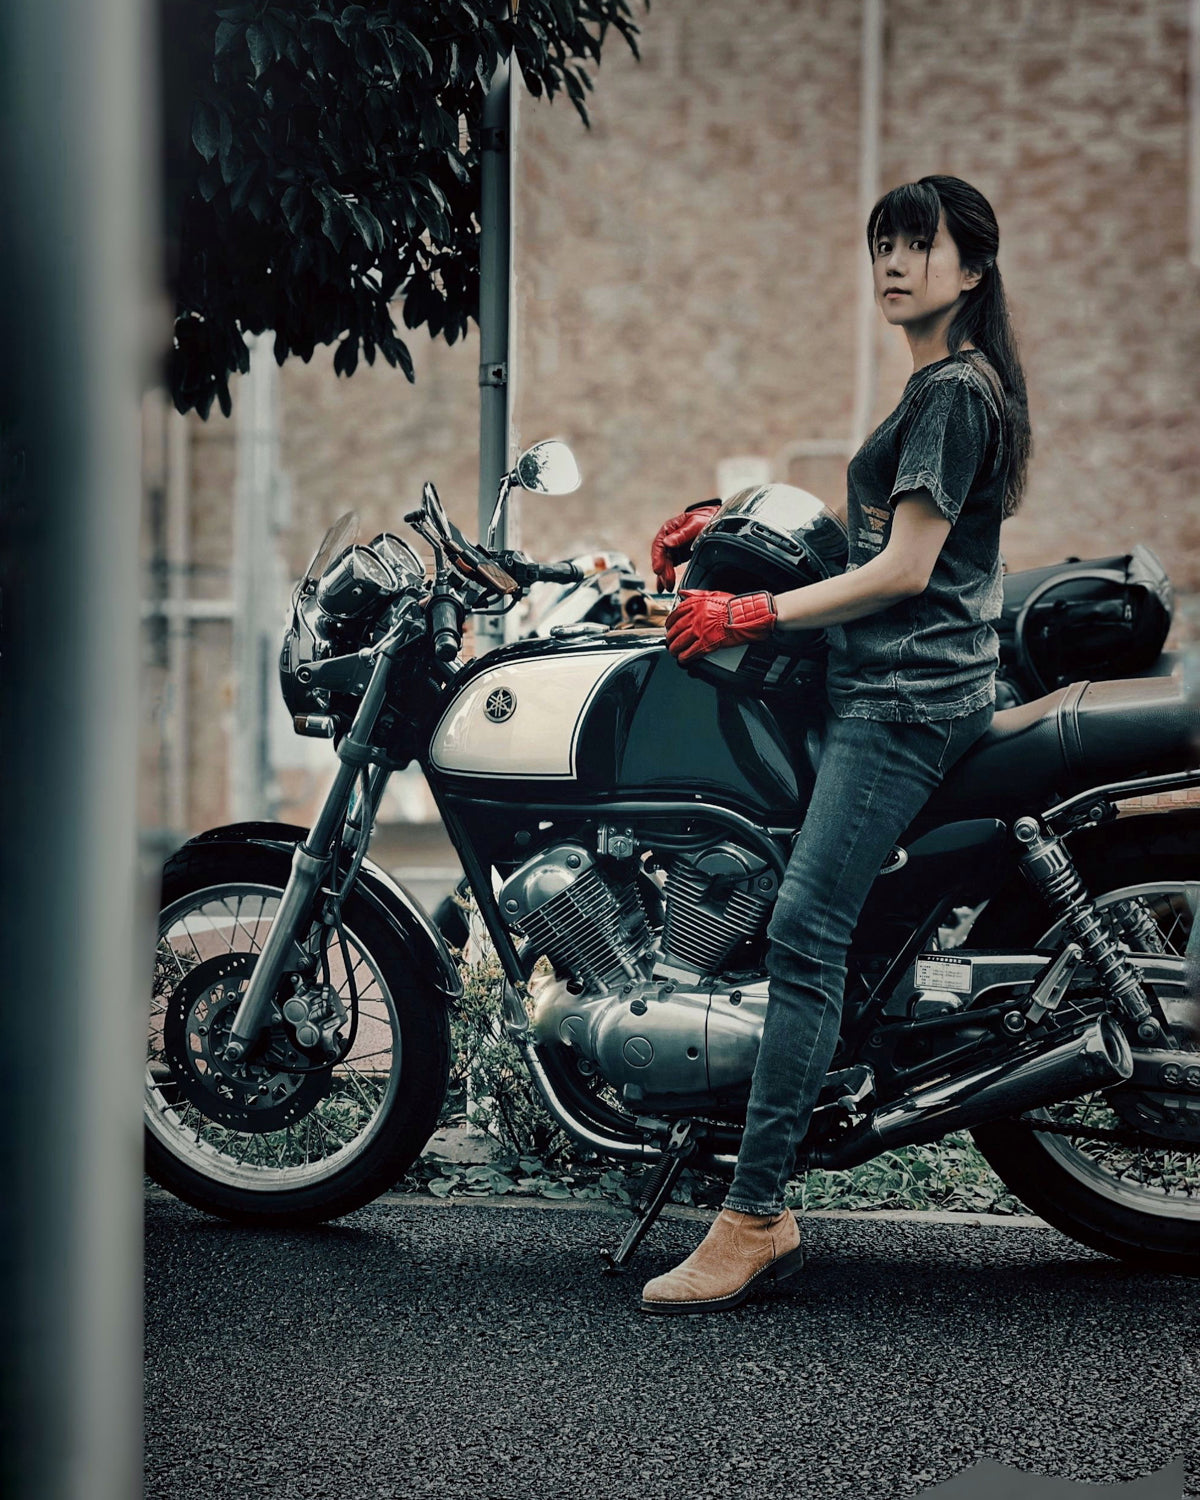 Short women can ride big motorcycles!